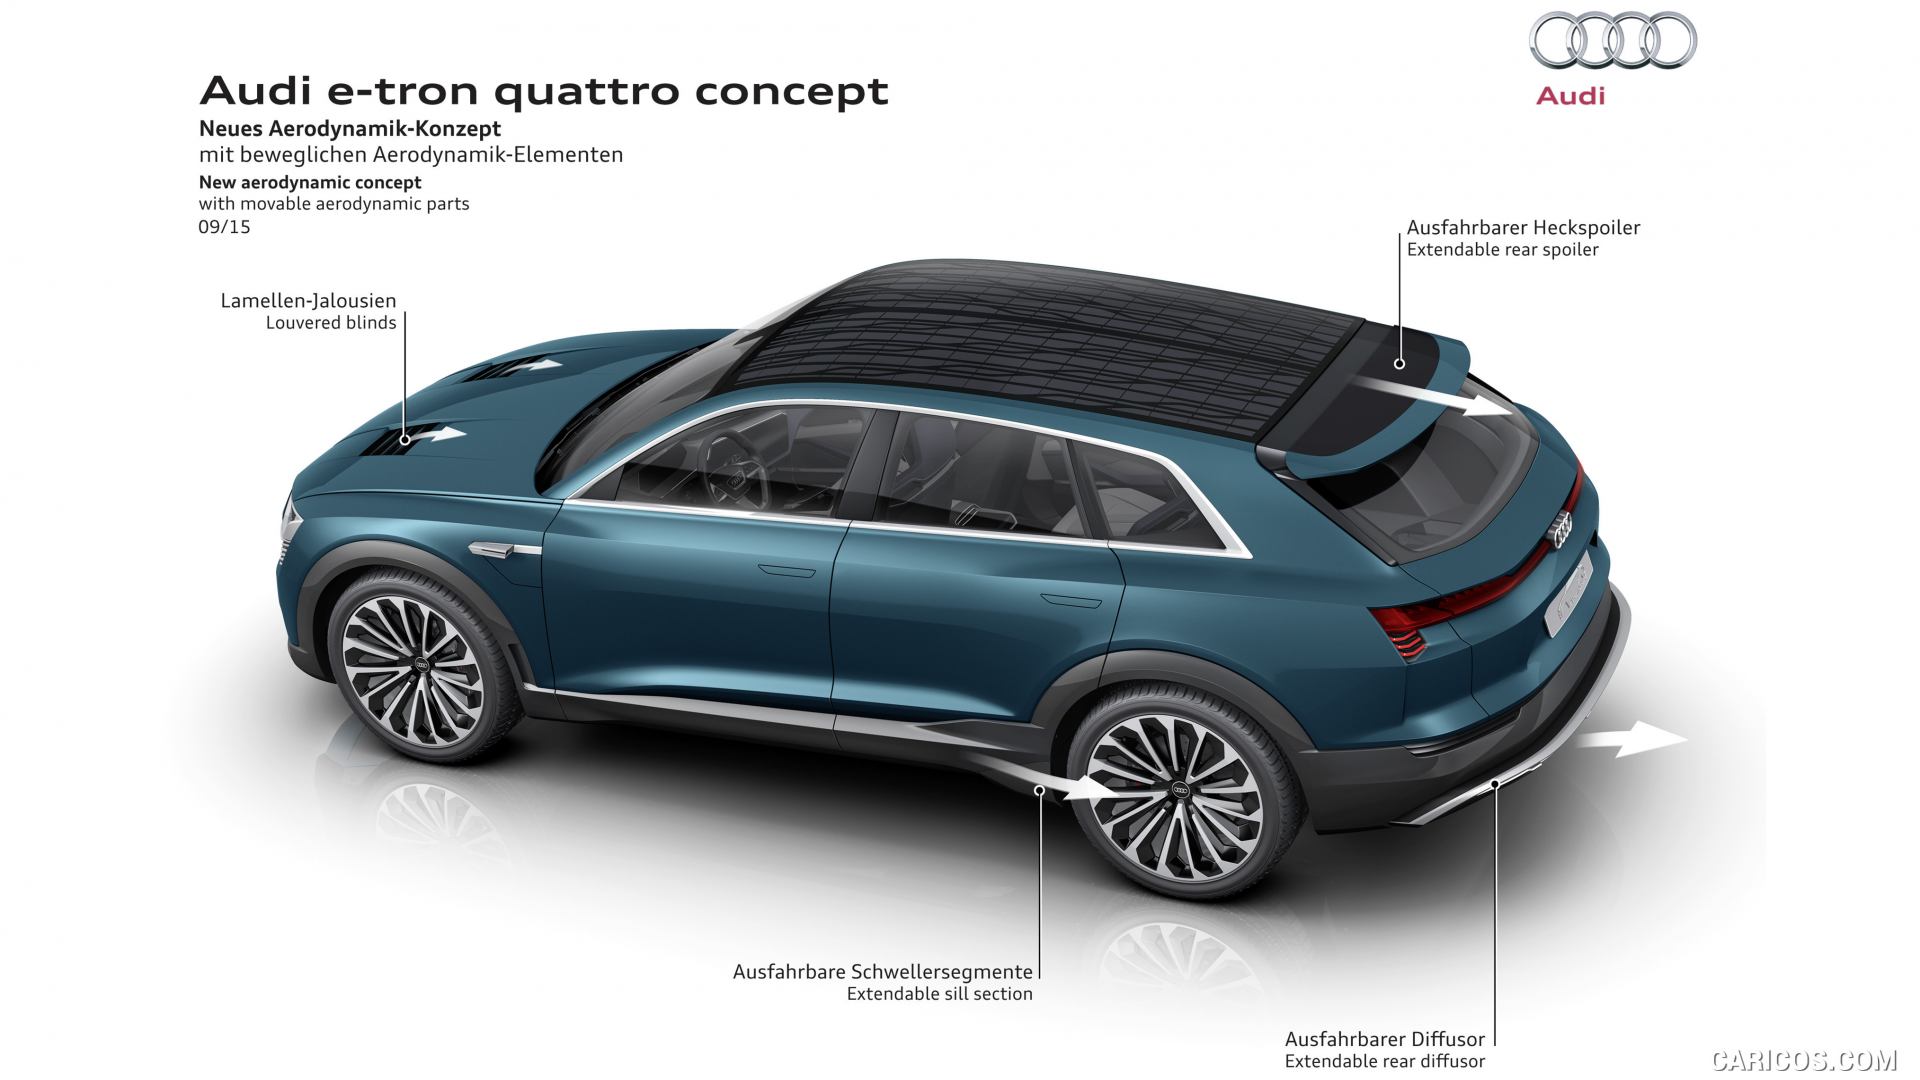 2015 Audi etron Quattro SUV Concept  New Aerodynamic Concept with 